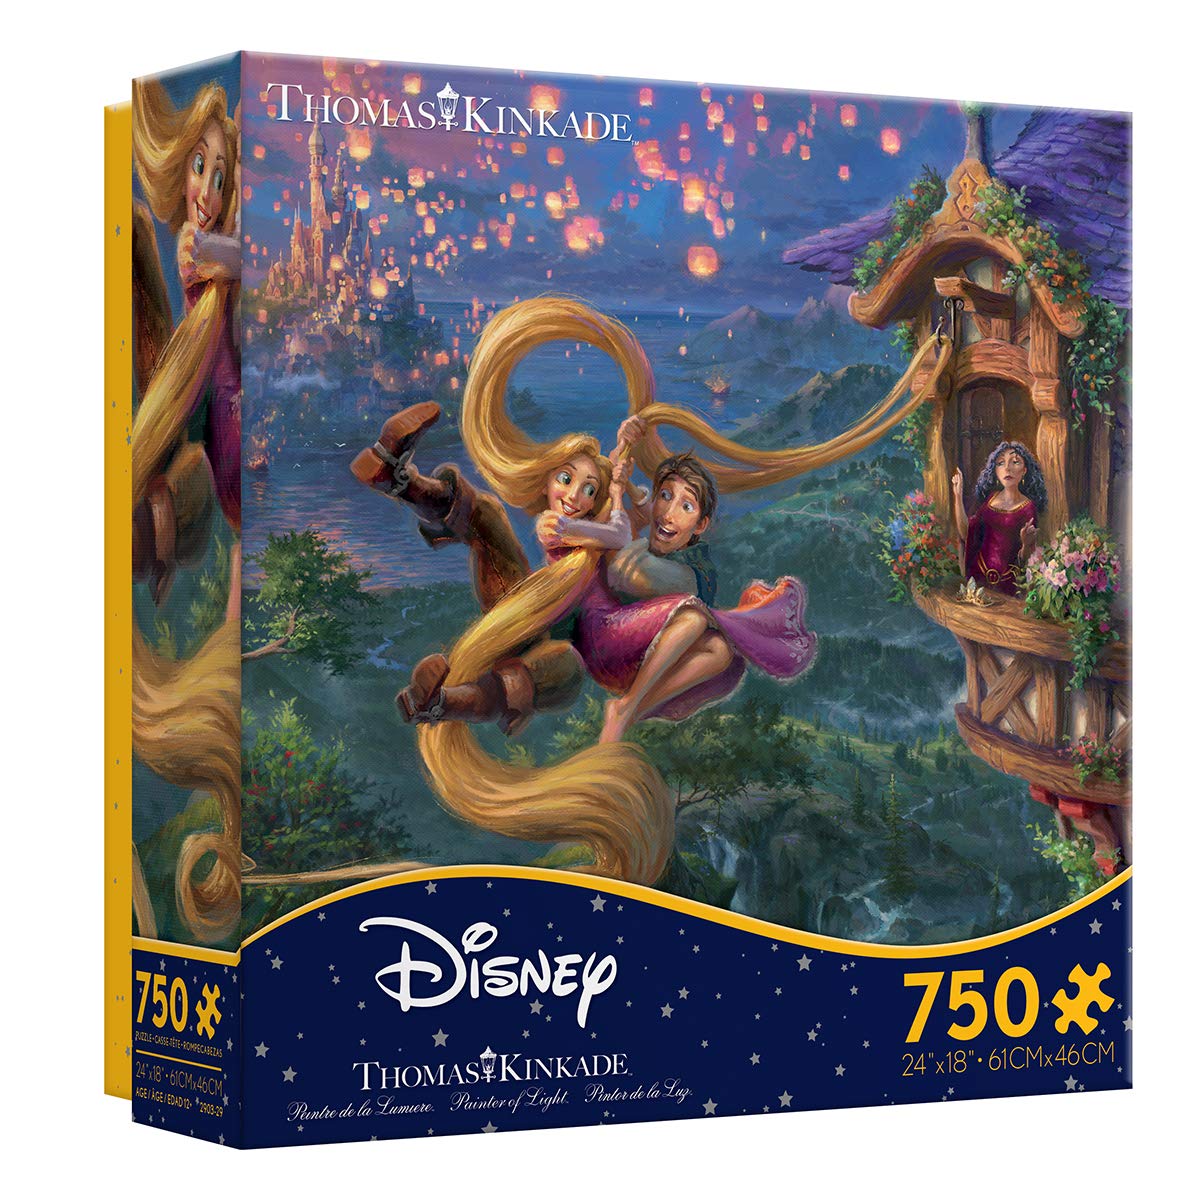 Ceaco - Thomas Kinkade - Disney Dreams Collection - Tangled - 750 Piece Jigsaw Puzzle